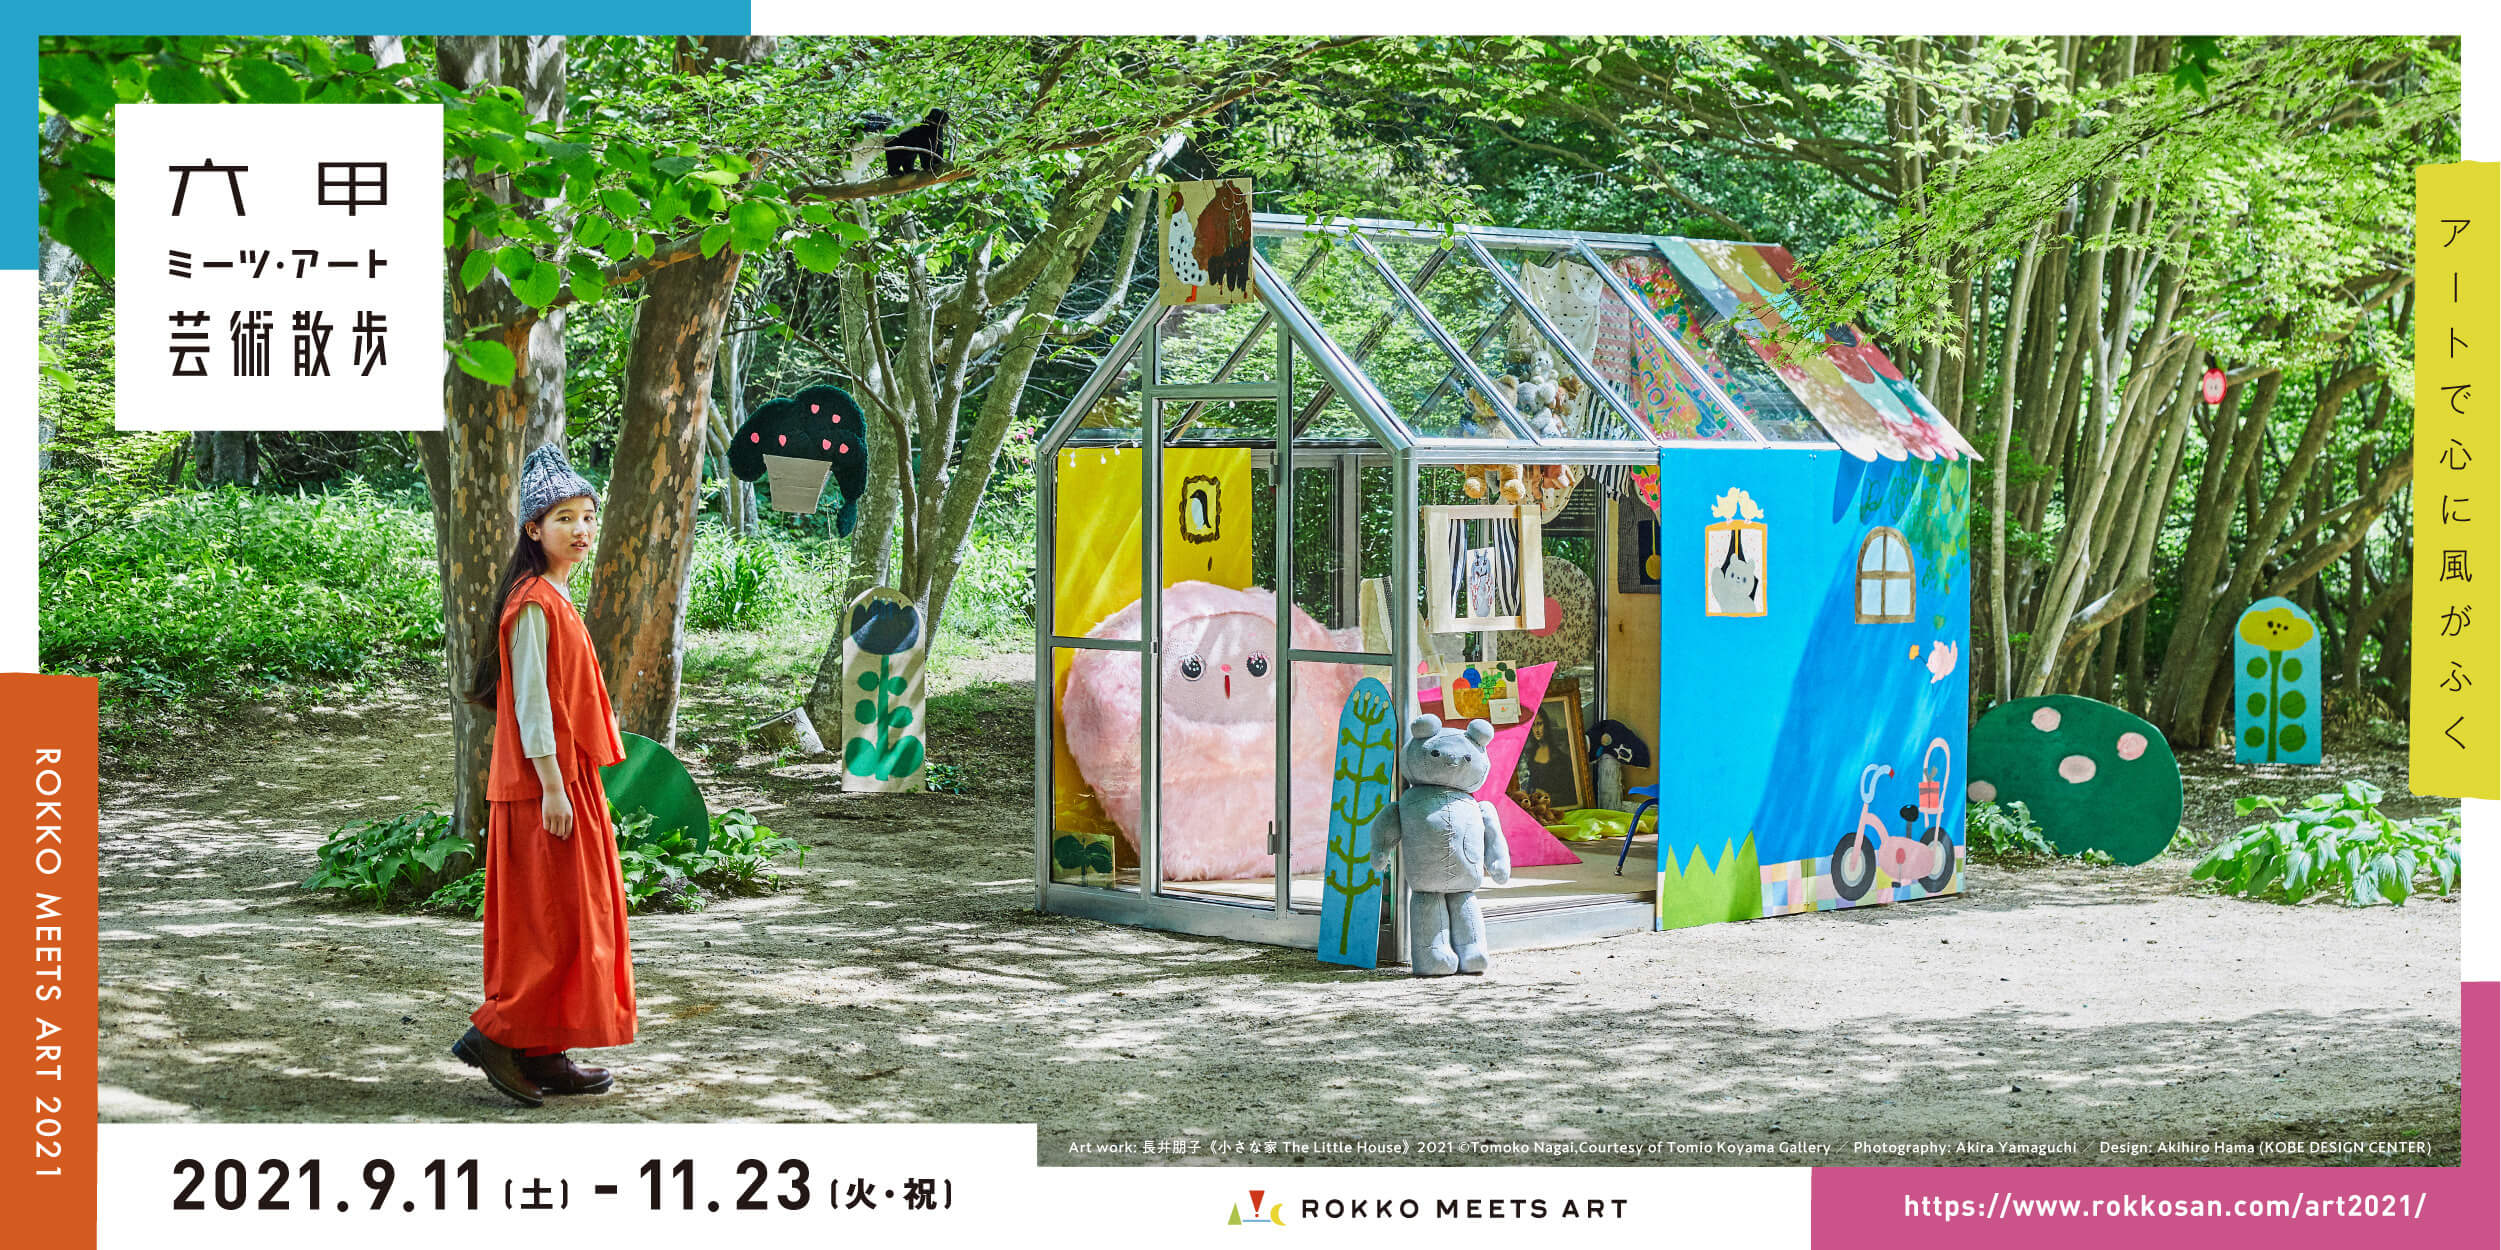 Rokko trifft Art Art Walk 2021 Main Visual